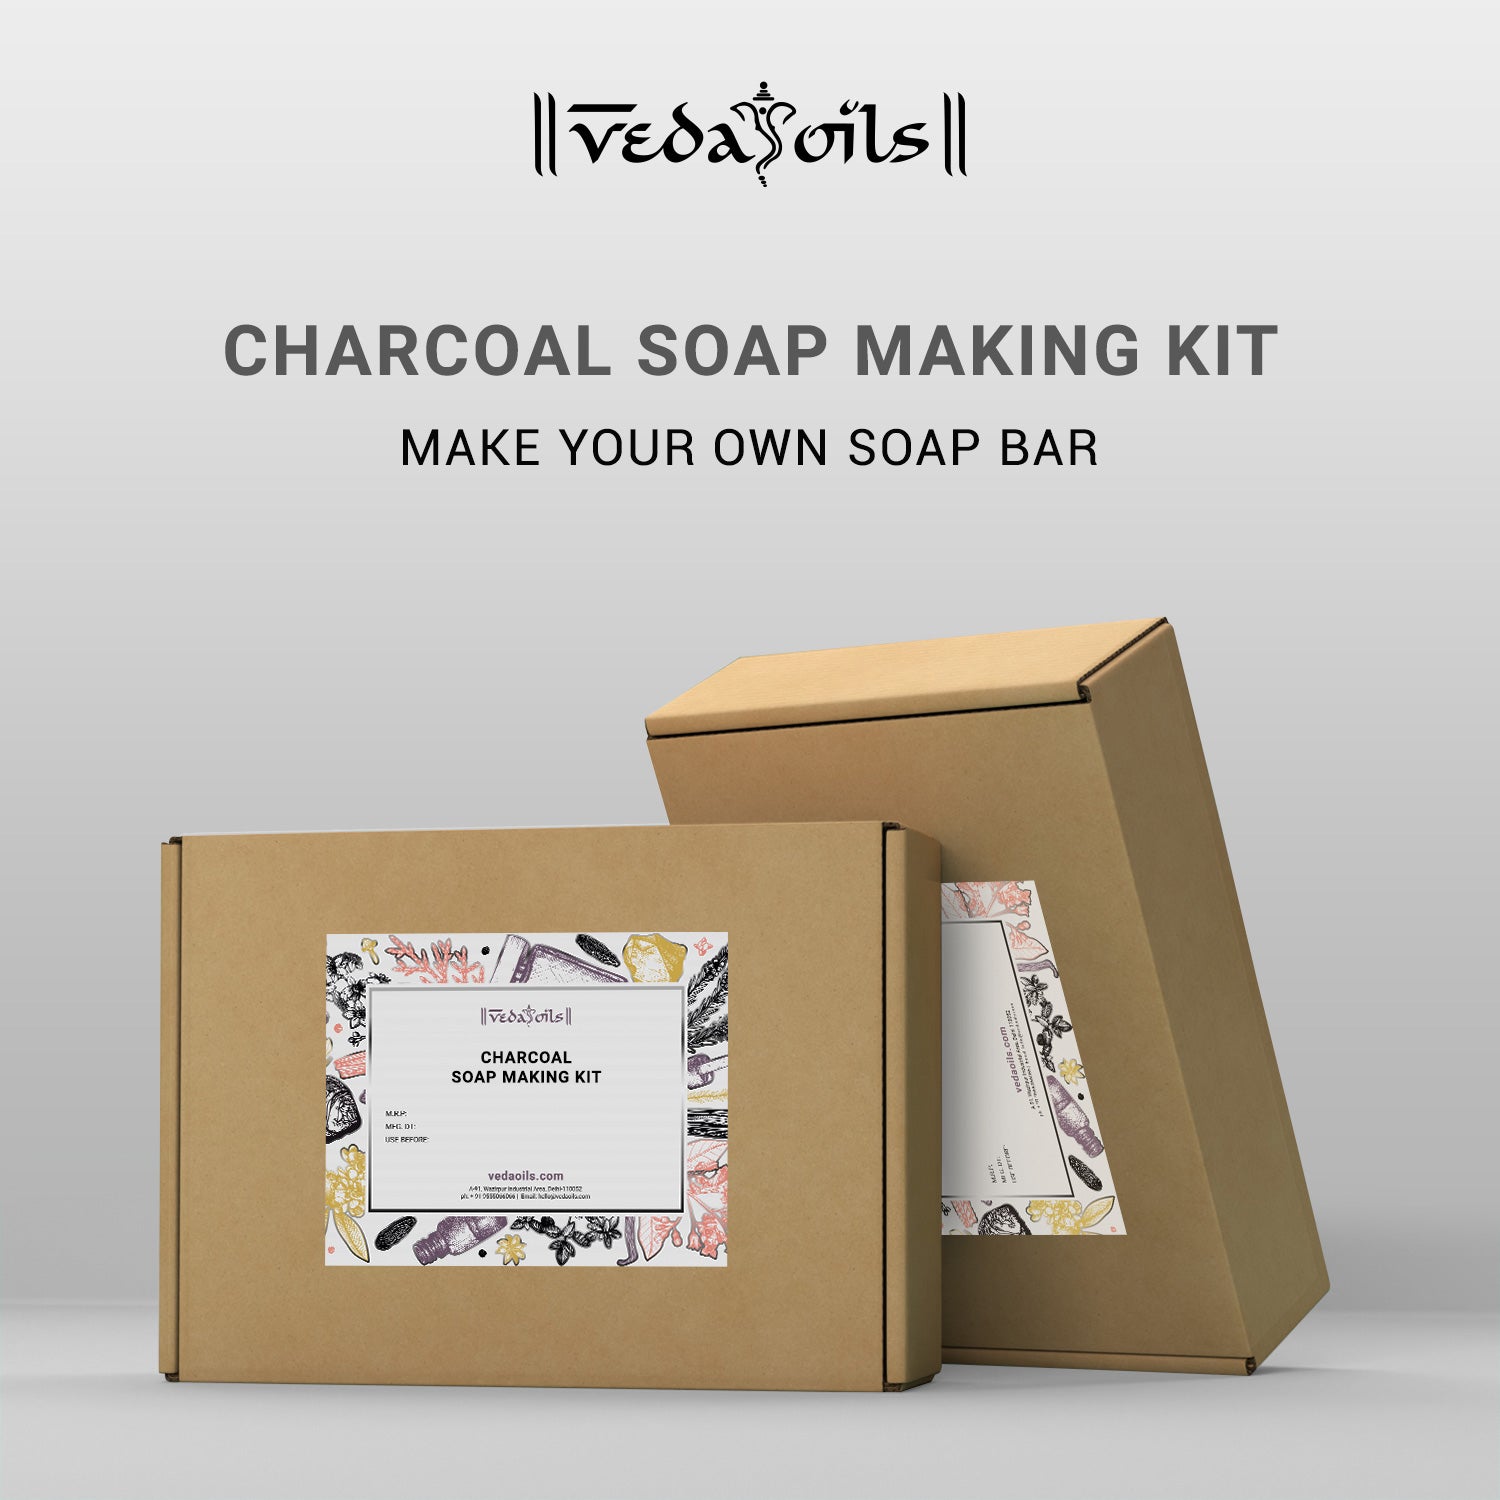 100% All Natural Soap Making Kit!